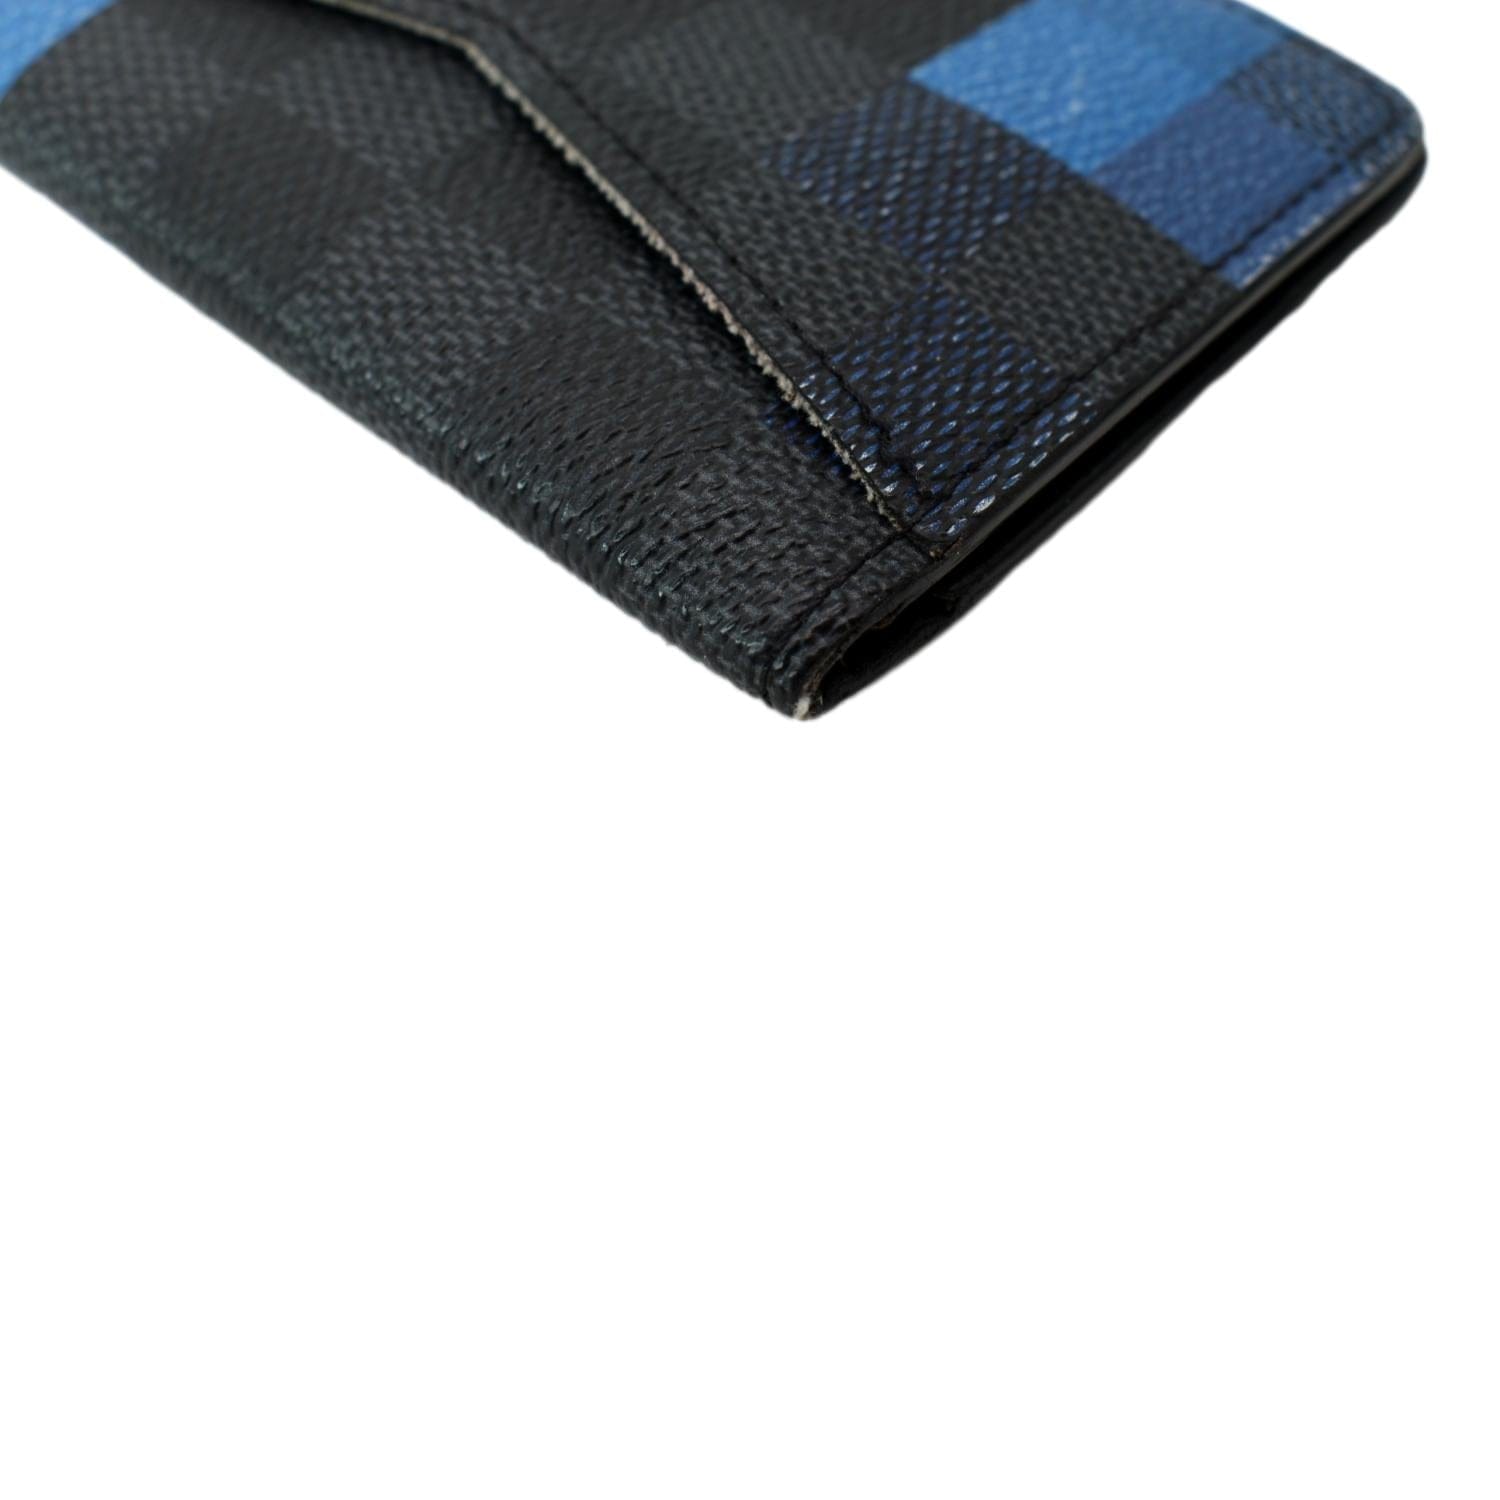 Louis Vuitton Damier Graphite Giant Pocket Wallet - DDH